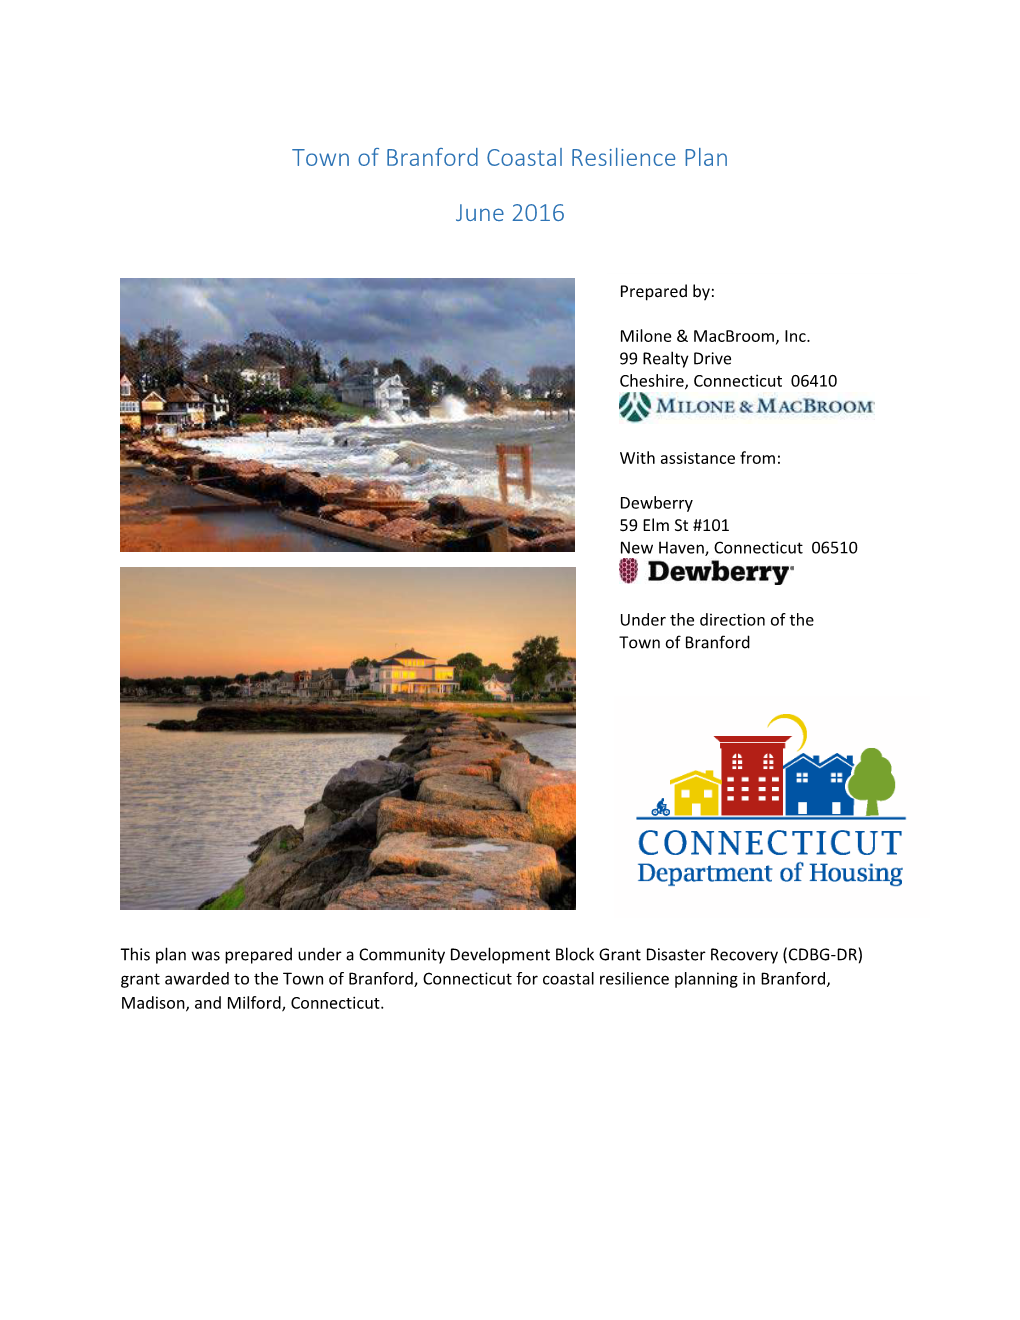 Town of Branford Coastal Resilience Plan June 2016